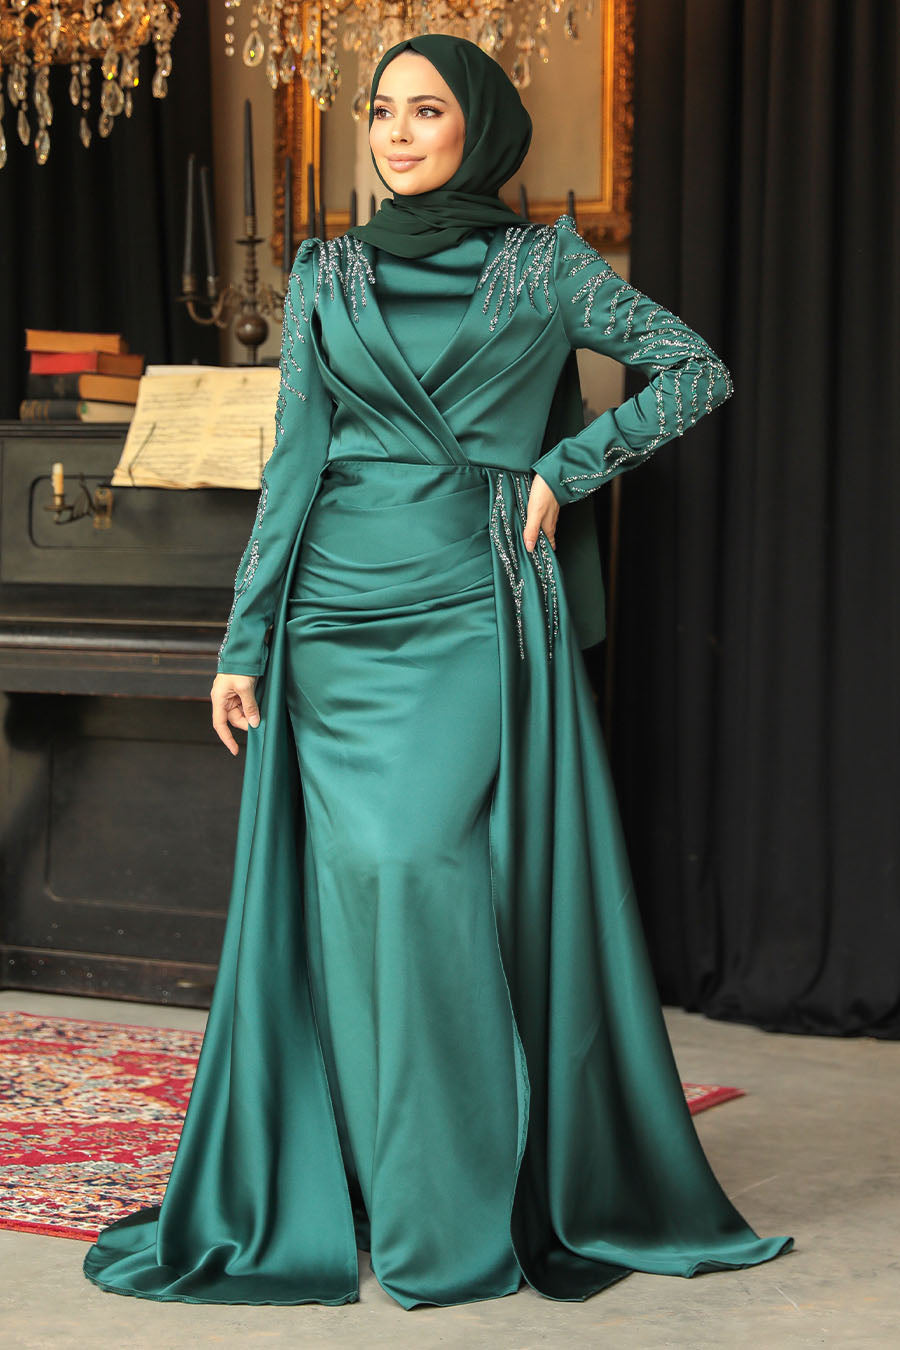 Introducing our Stunning Sparkling Evening Dress Abaya Emerald.